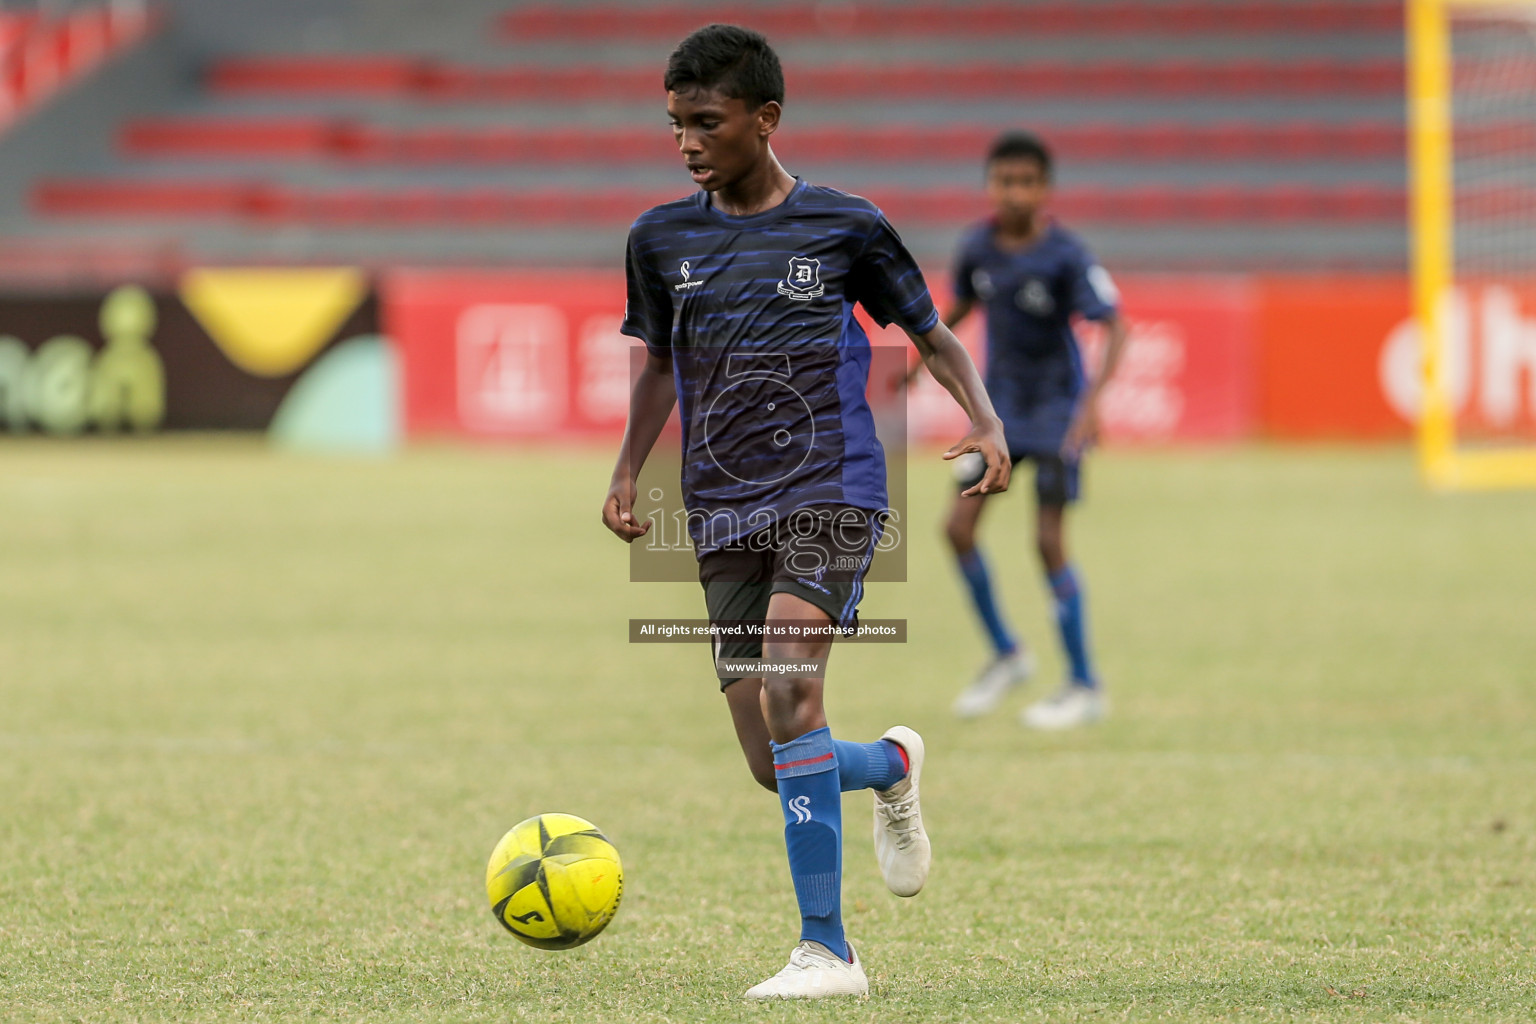 Dharumavantha School vs LH.EDU.CENTRE in MAMEN Inter School Football Tournament 2019 (U13) in Male, Maldives on 15th April 2019